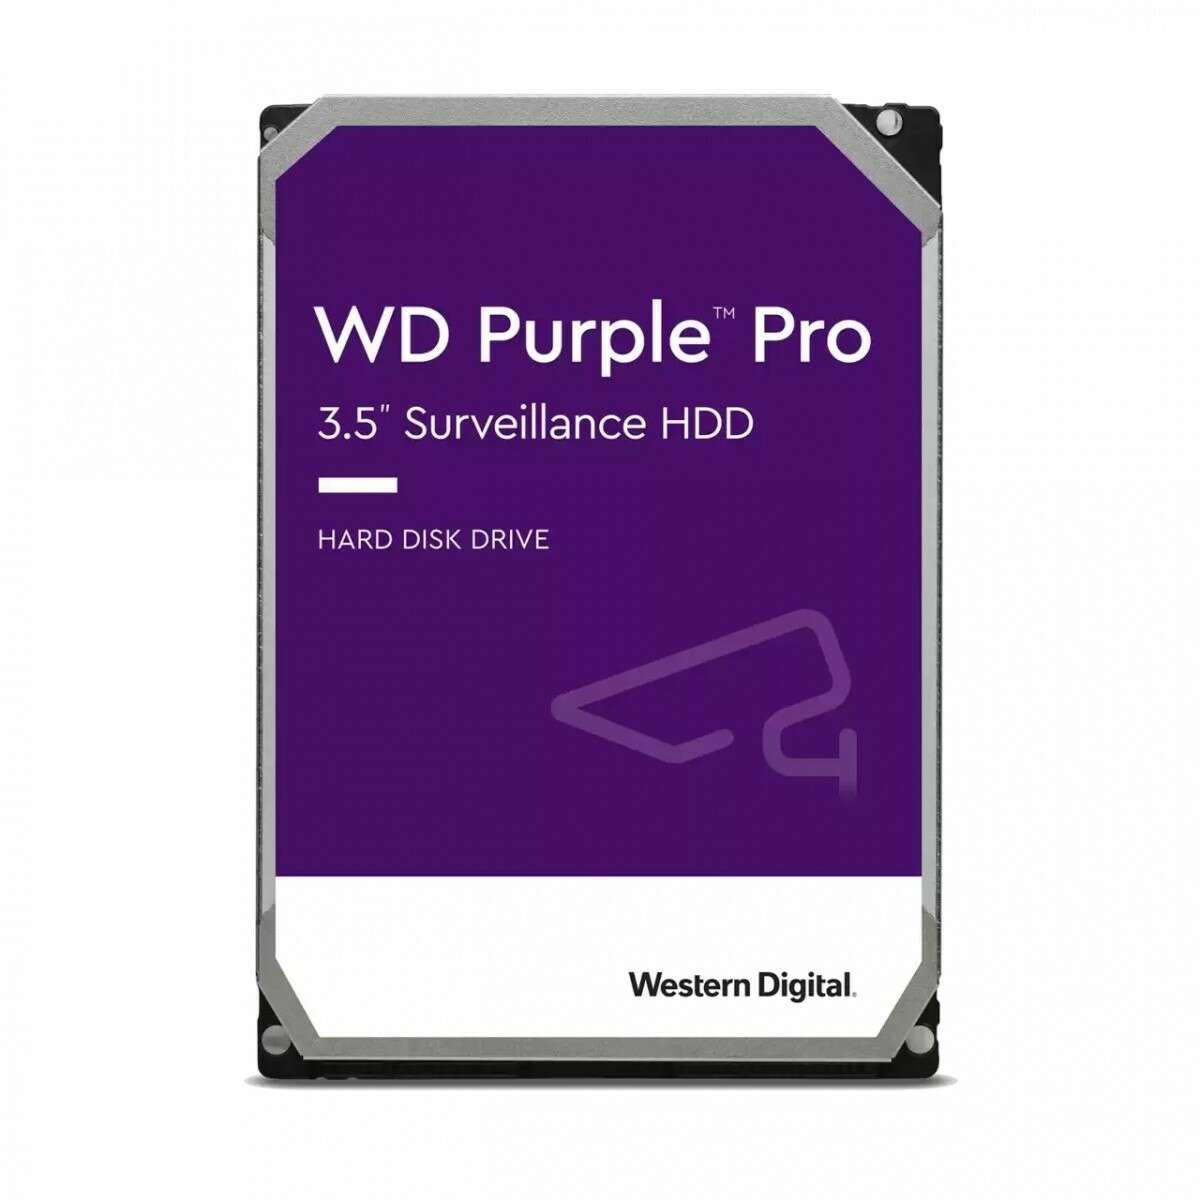 Western digital 8tb purple pro sata3 3.5" dvr hdd